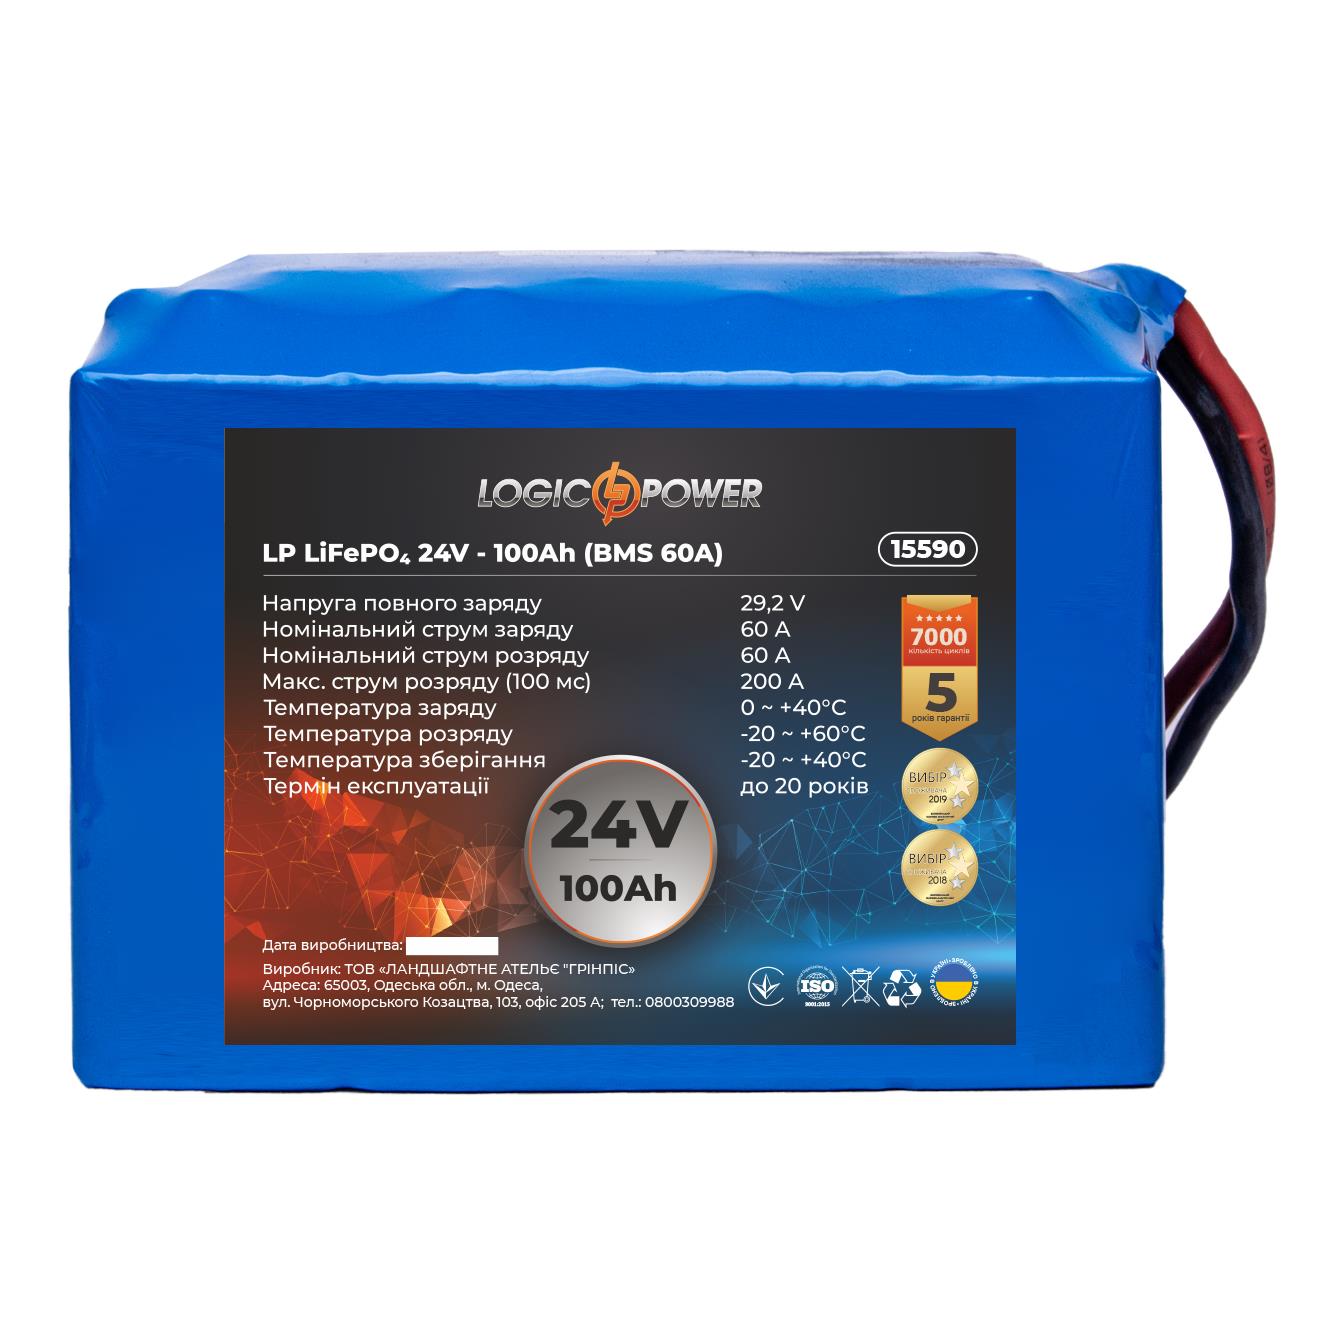 LogicPower LP LiFePO4 24V - 100 Ah (BMS 60A) (15590)